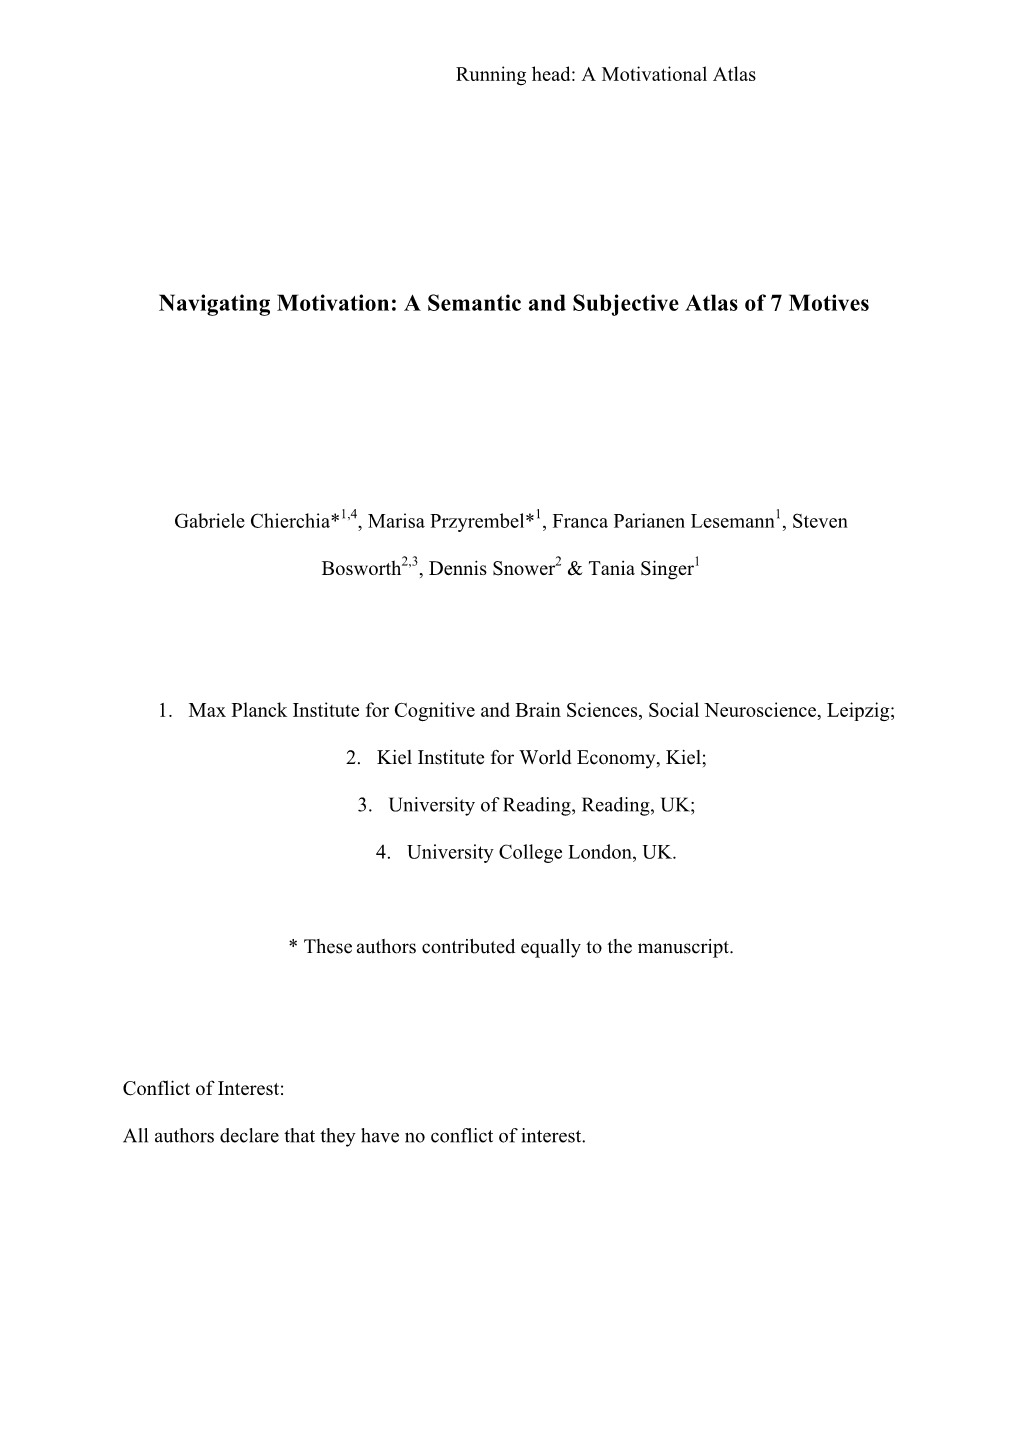 Navigating Motivation: a Semantic and Subjective Atlas of 7 Motives